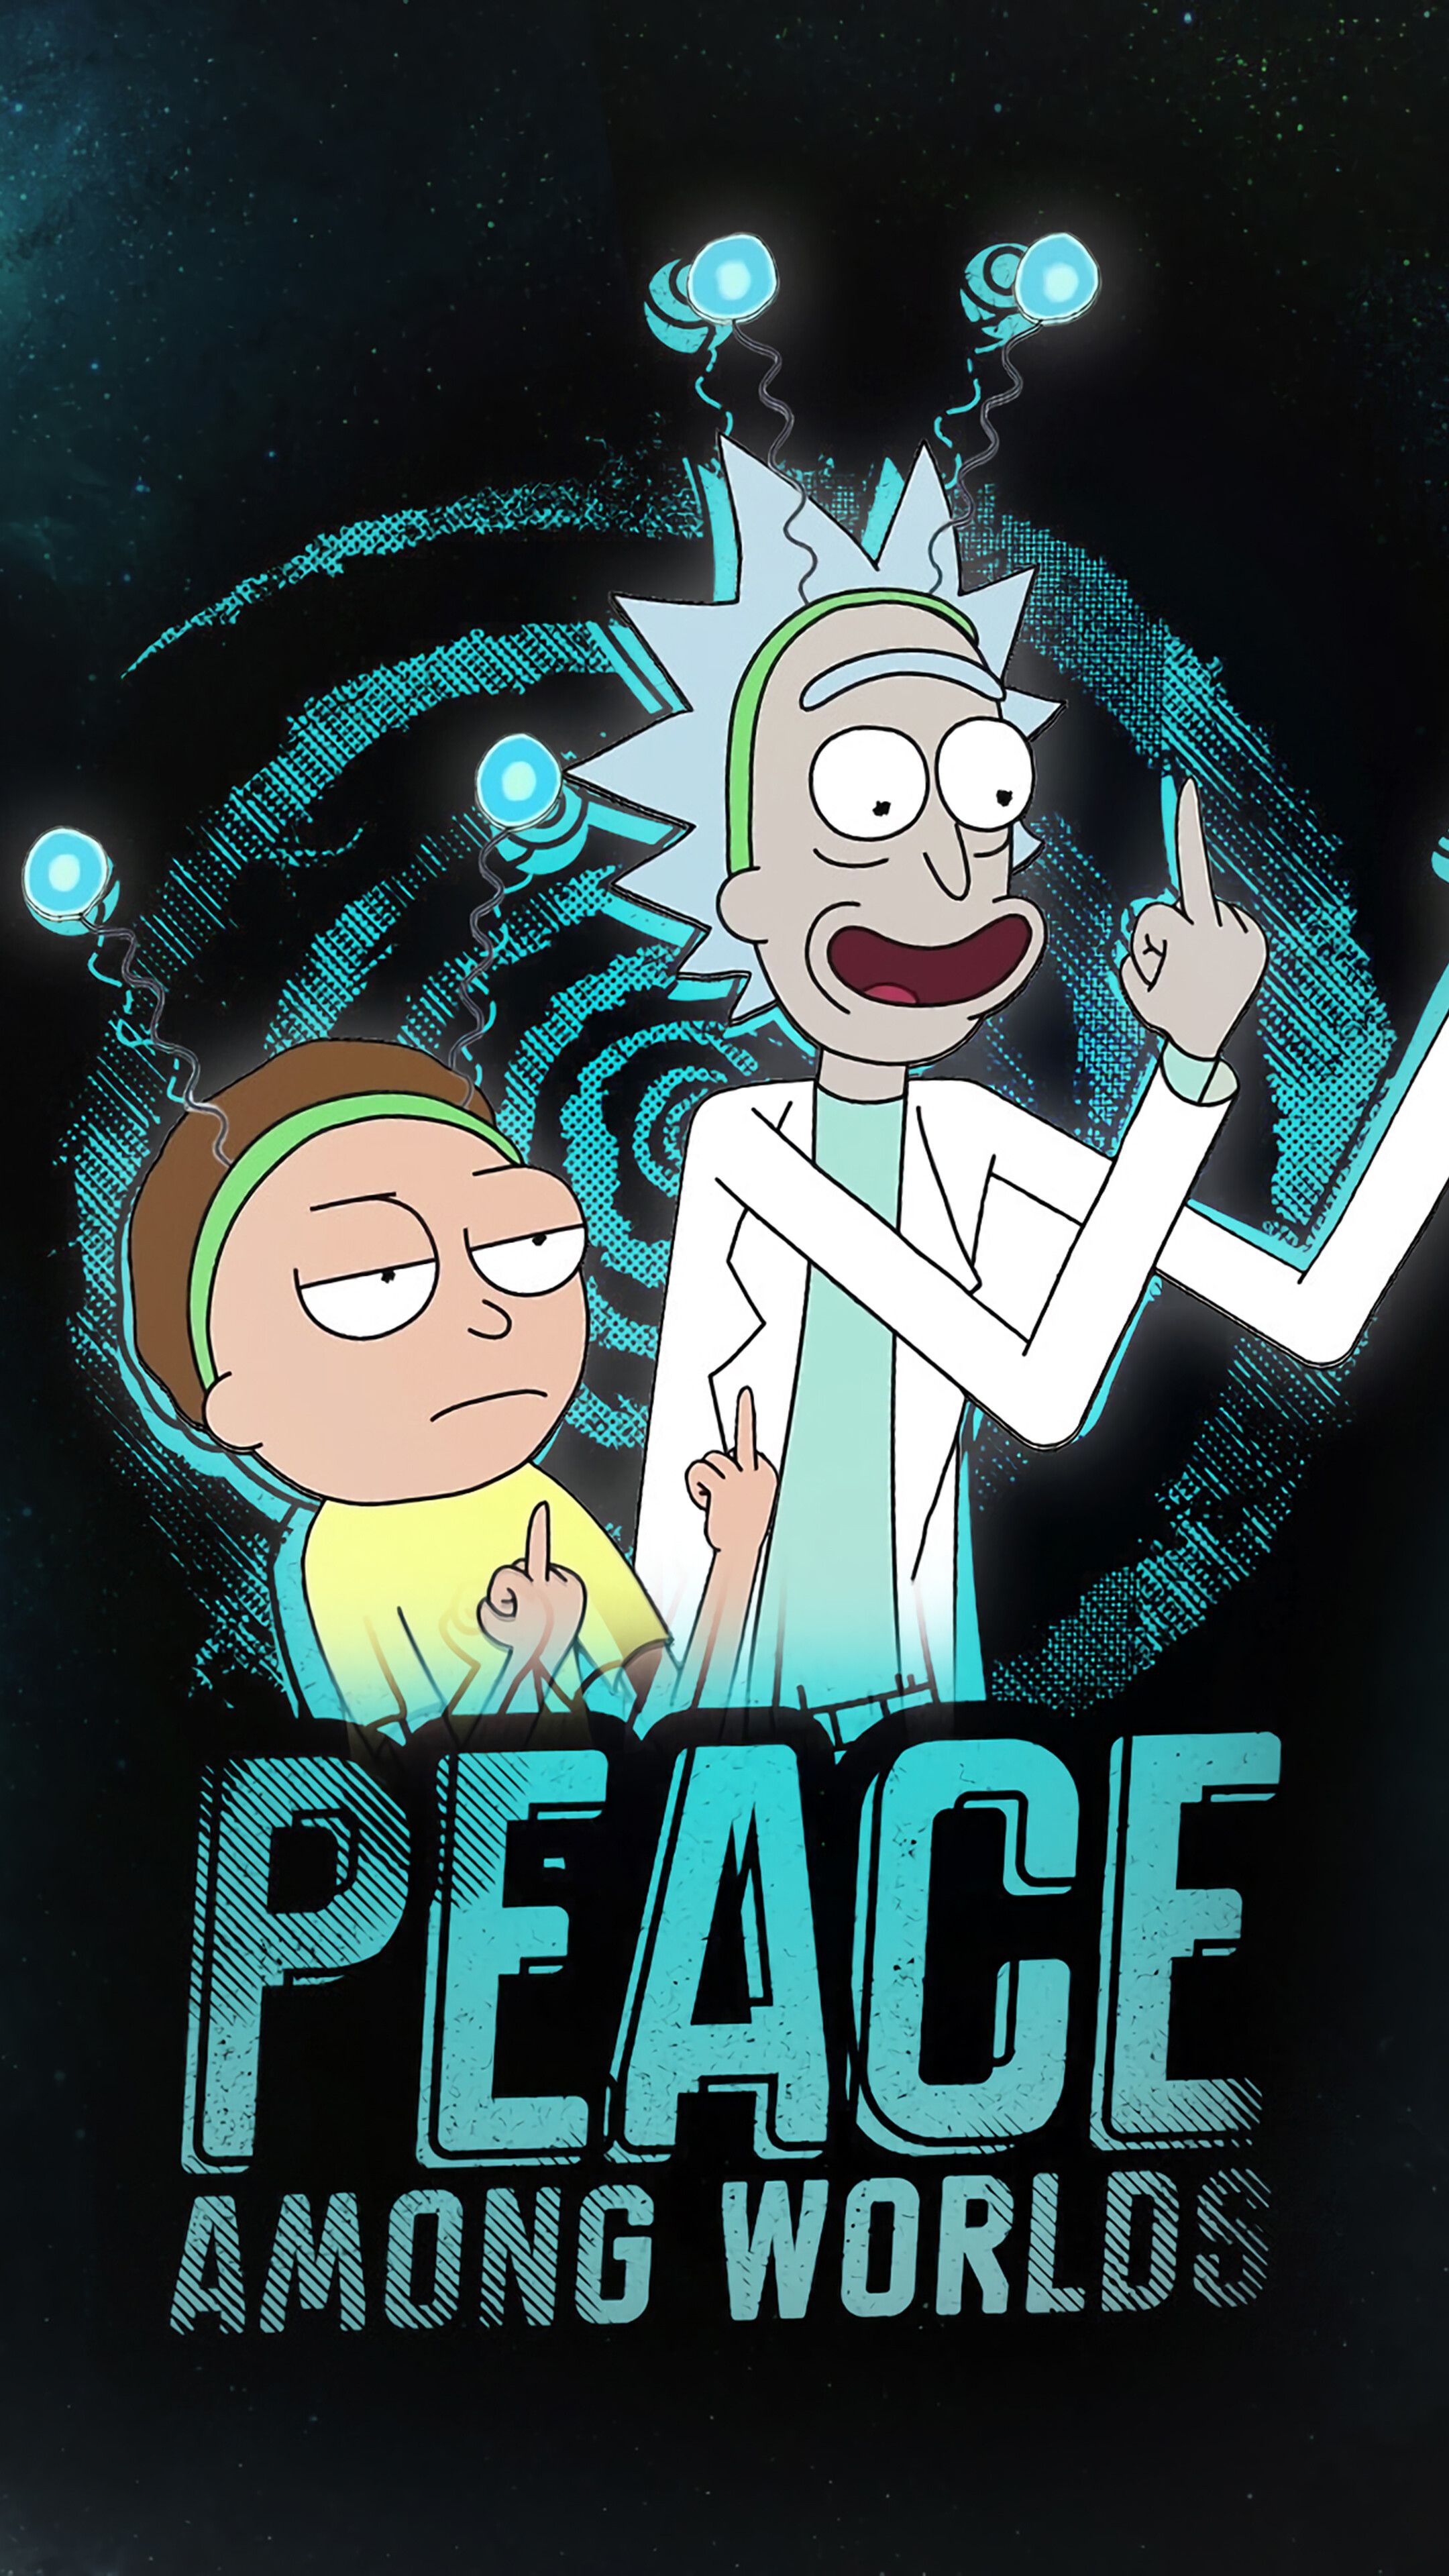 Rick & Morty iPhone wallpaper - 9GAG